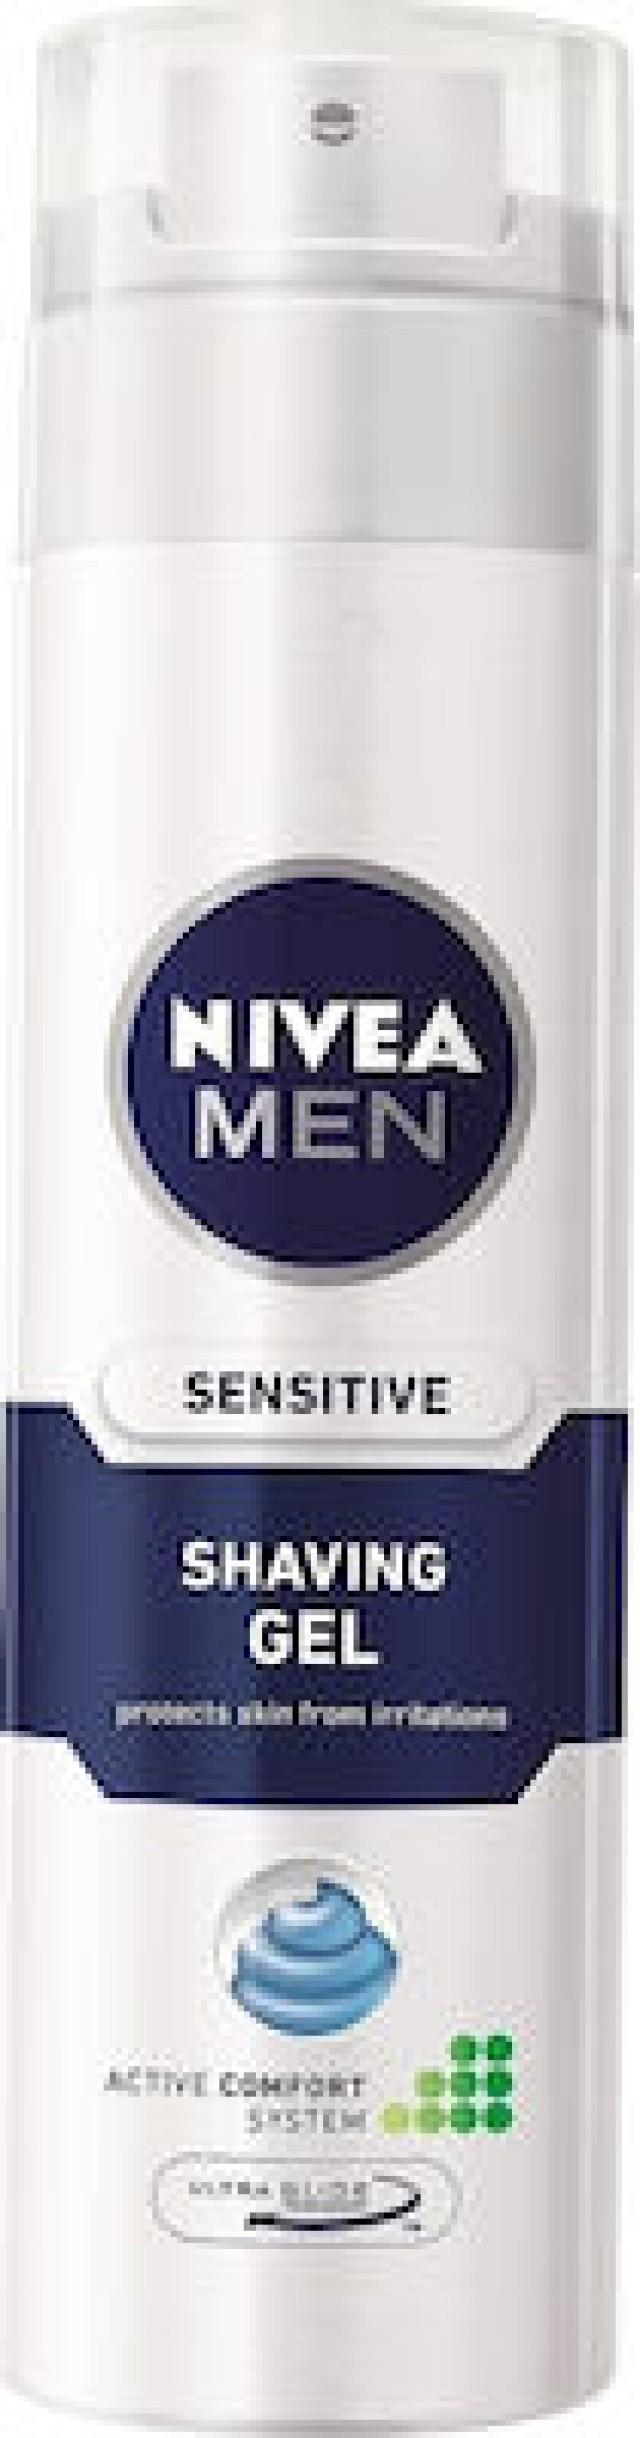 Nivea Men Sensitive Shaving Gel Ξυρίσματος για Ευαίσθητες Επιδερμίδες 200ml